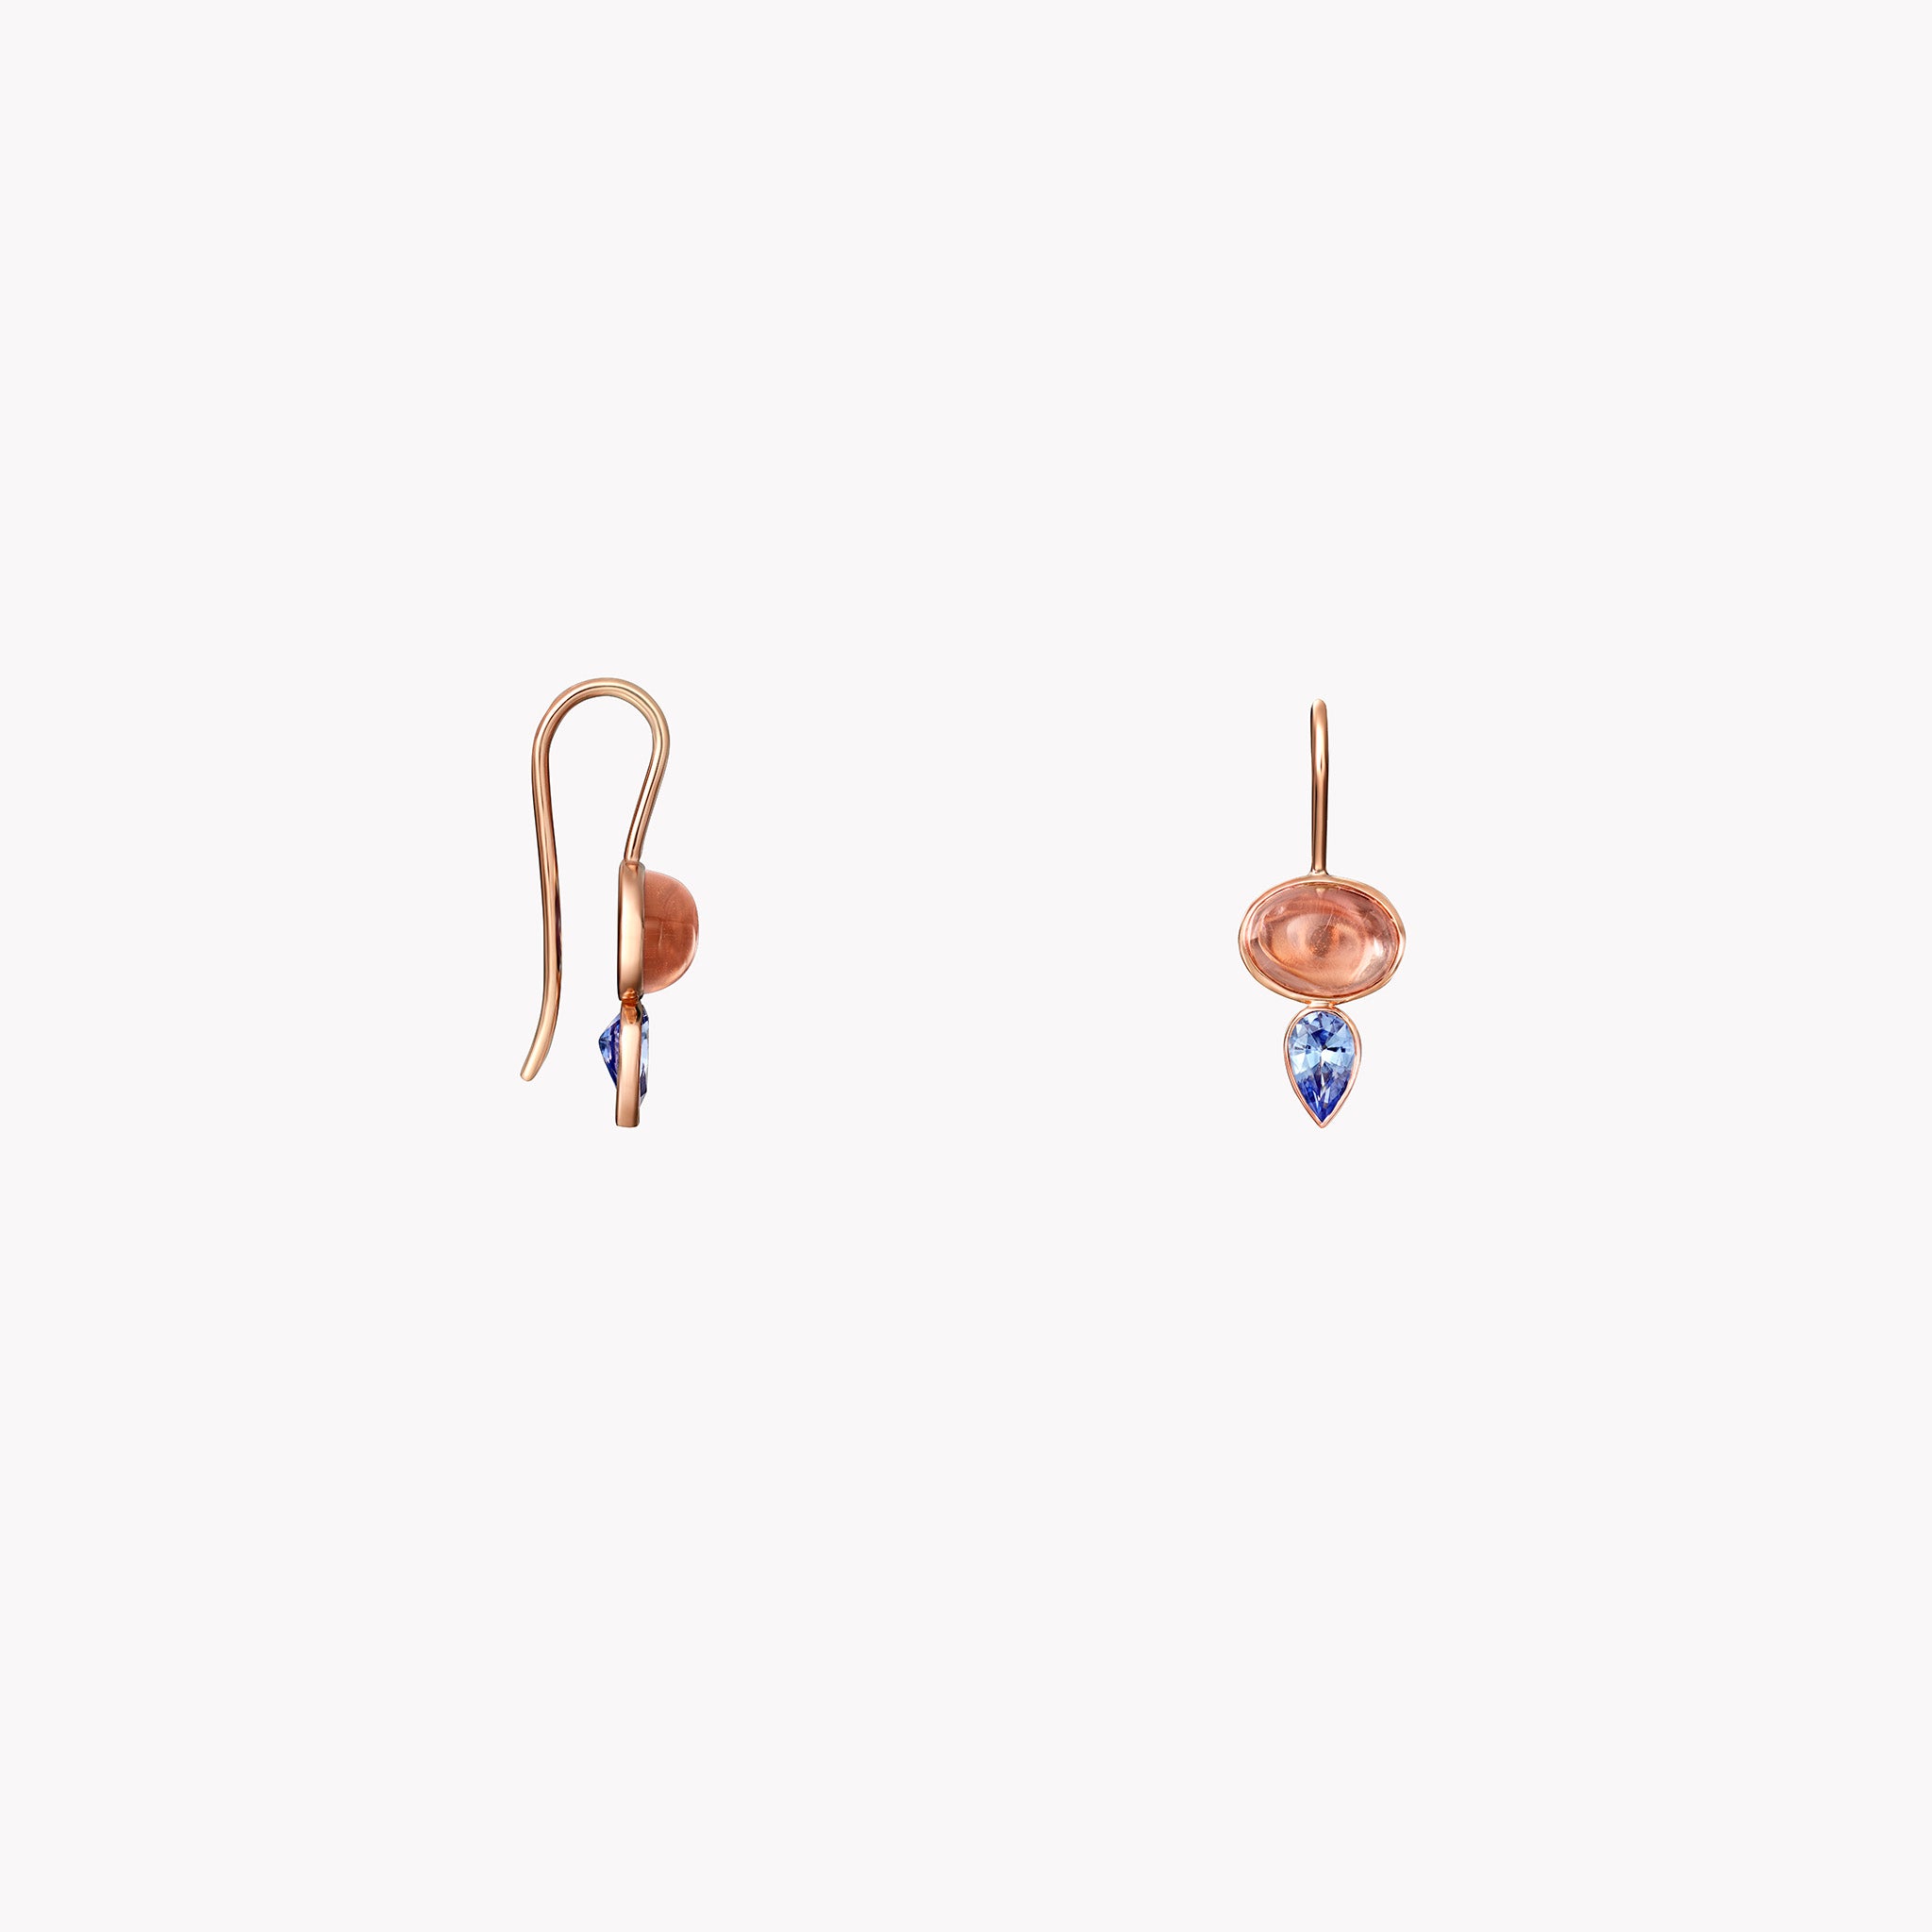 The Peach Astrid Earrings